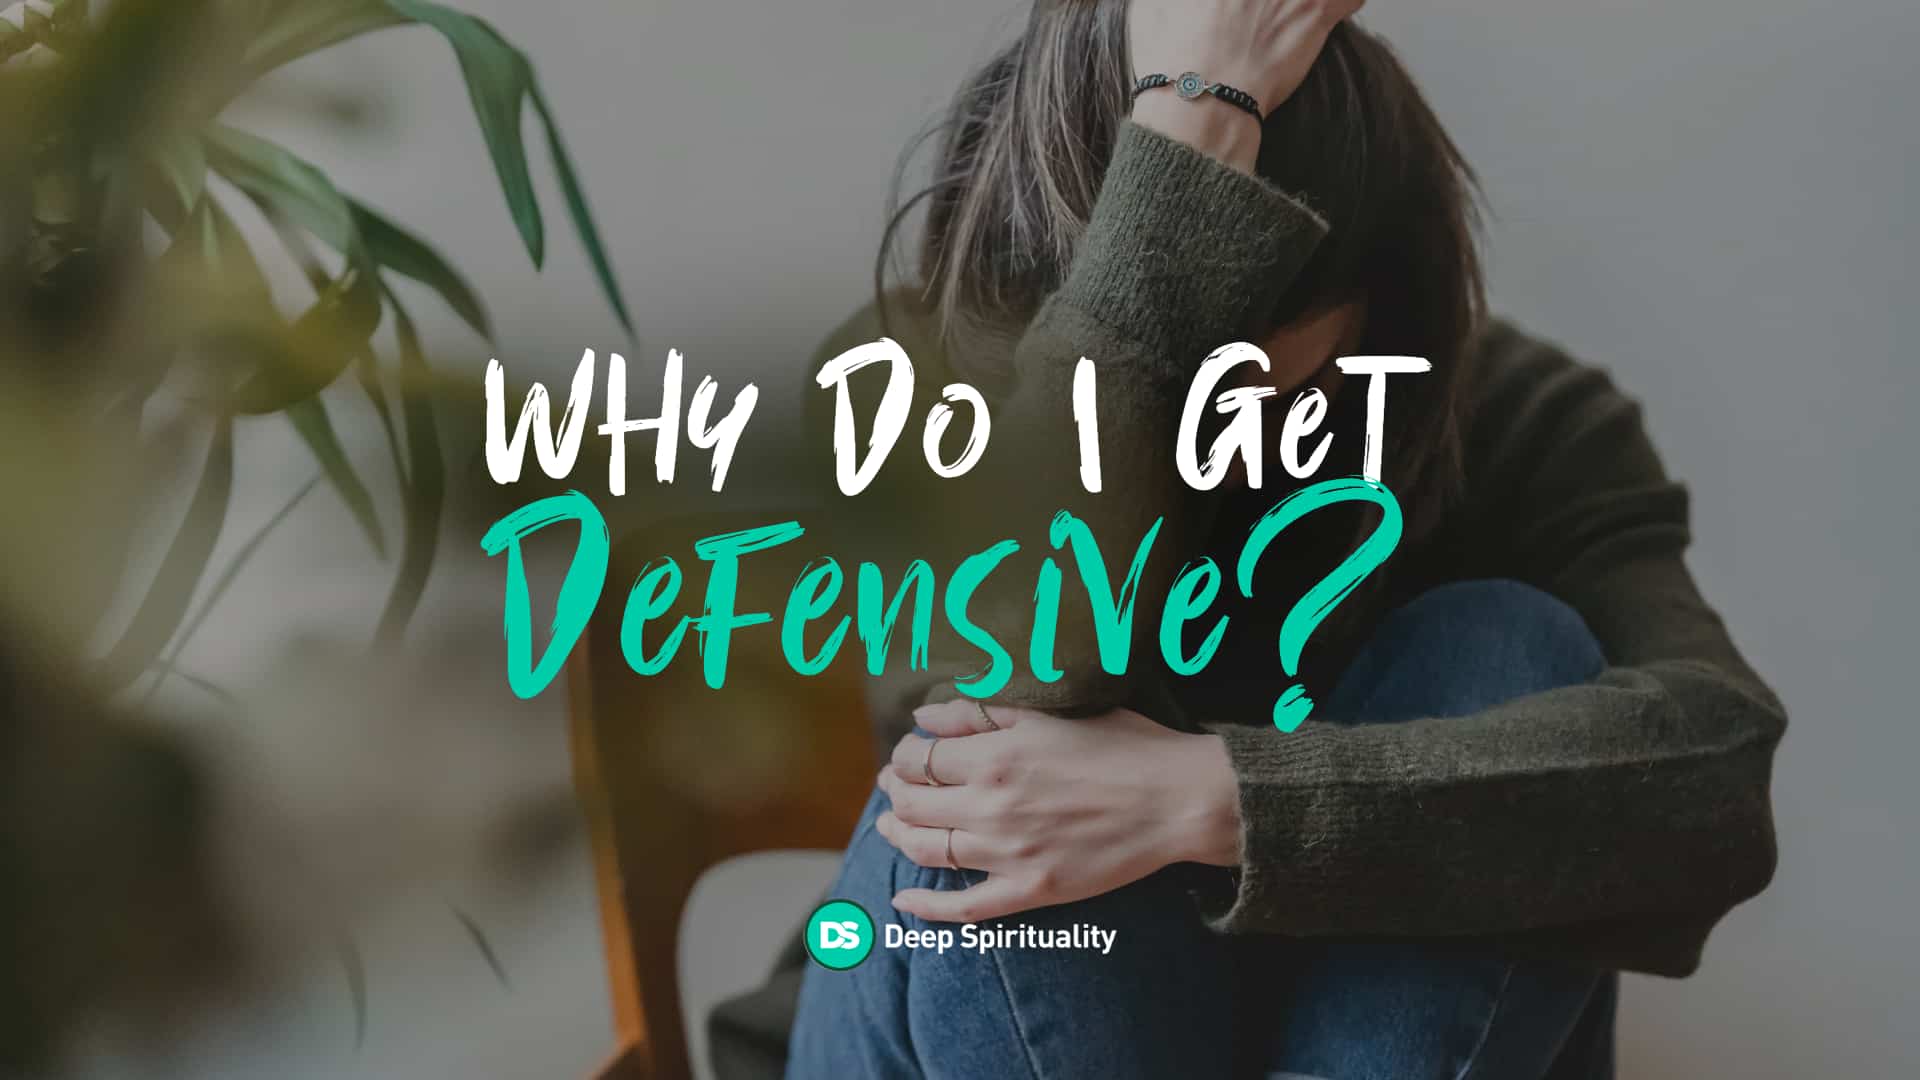 Why Do I Get So Defensive? 14